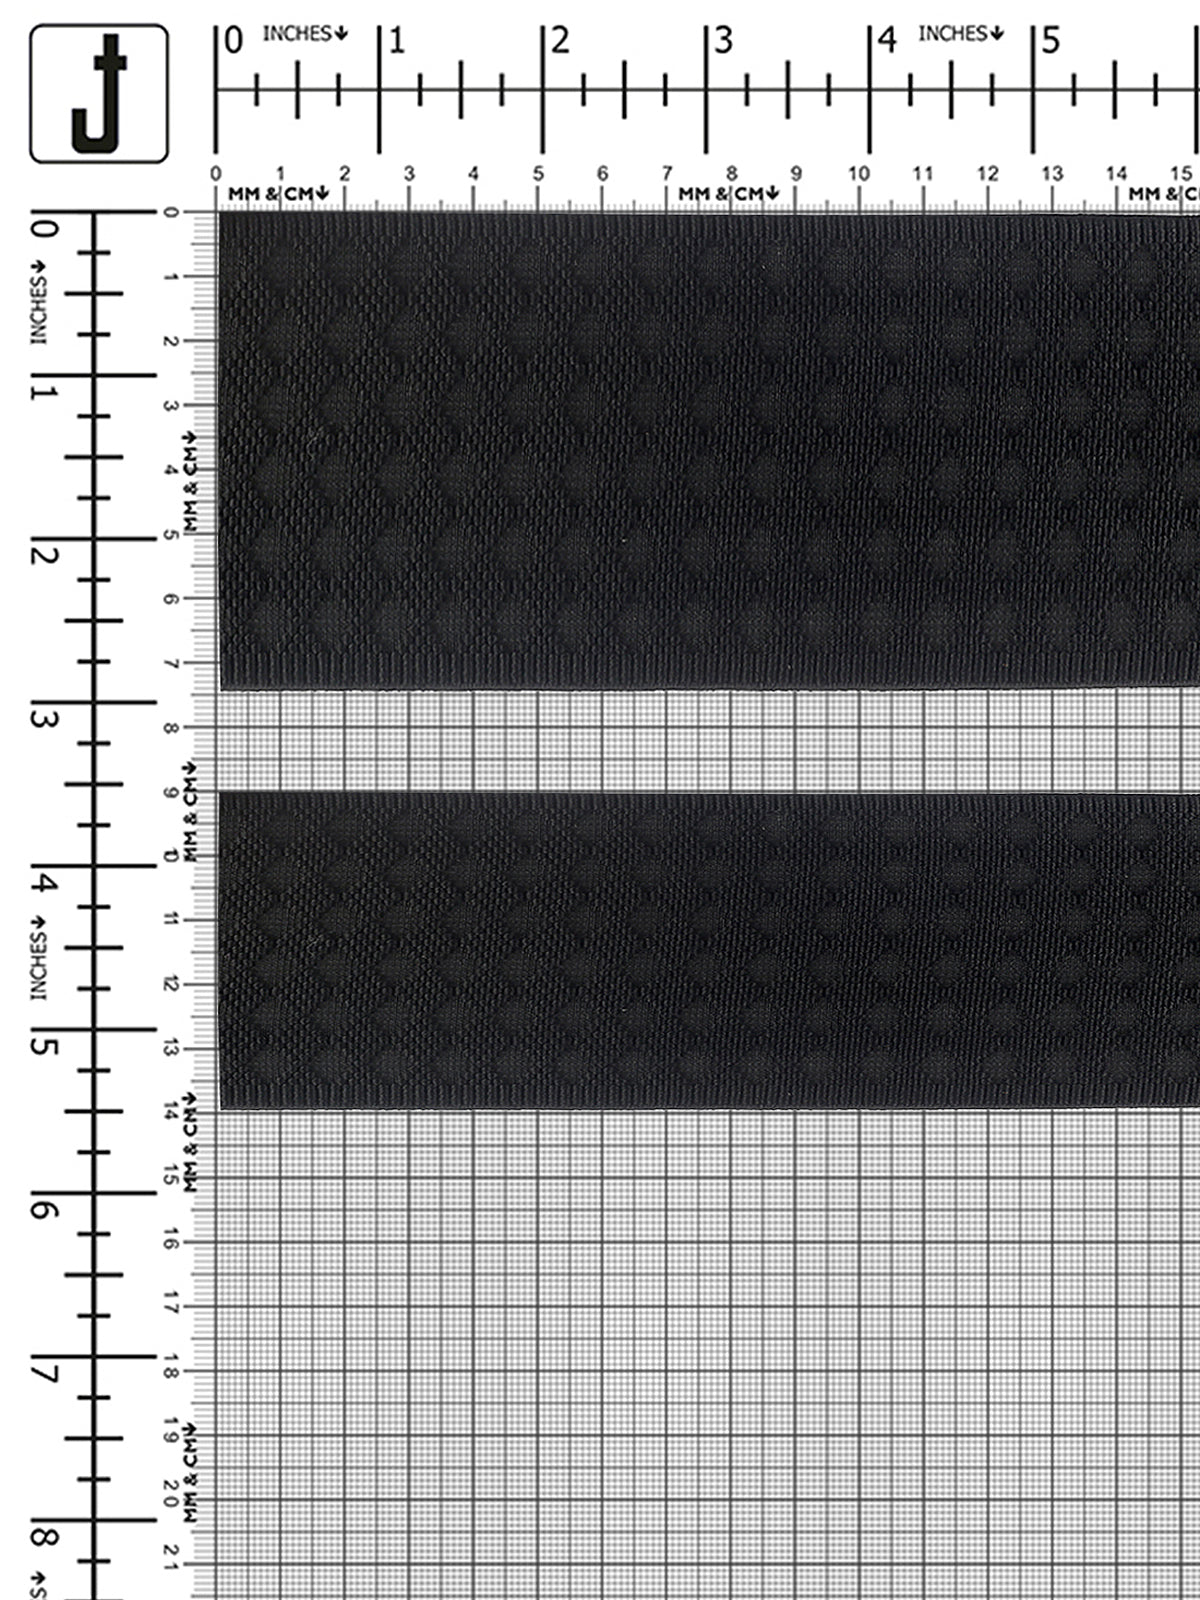 Knit Elastic Webbing Strap Band Strong Stretchable Elastic